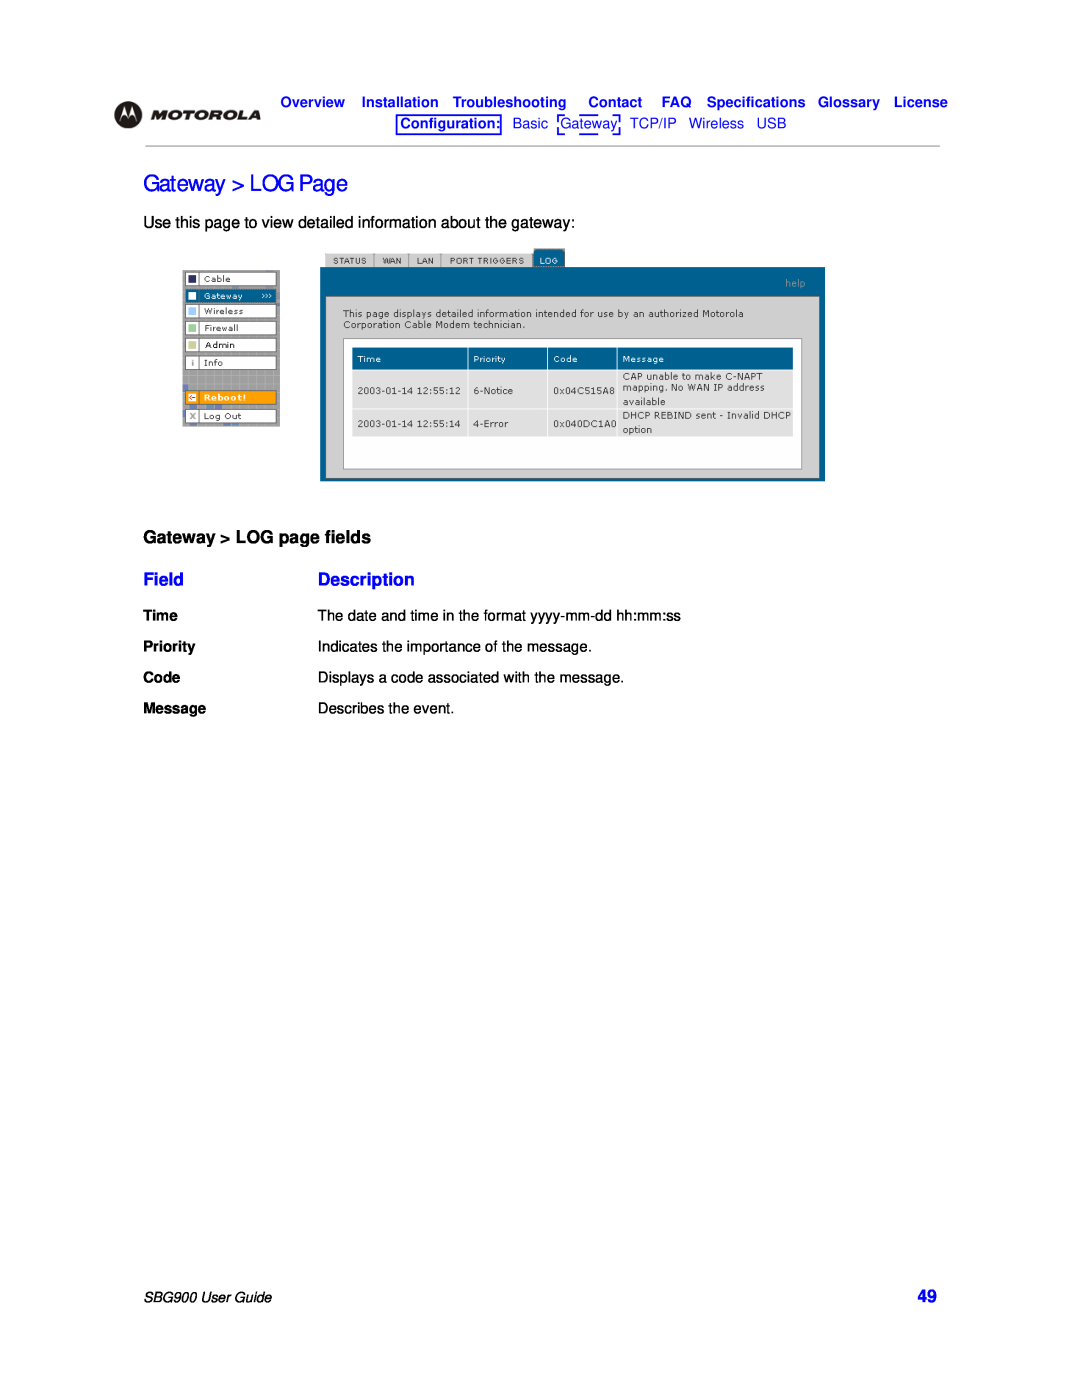 Motorola manual Gateway LOG Page, Gateway LOG page fields, Field, Description, SBG900 User Guide 